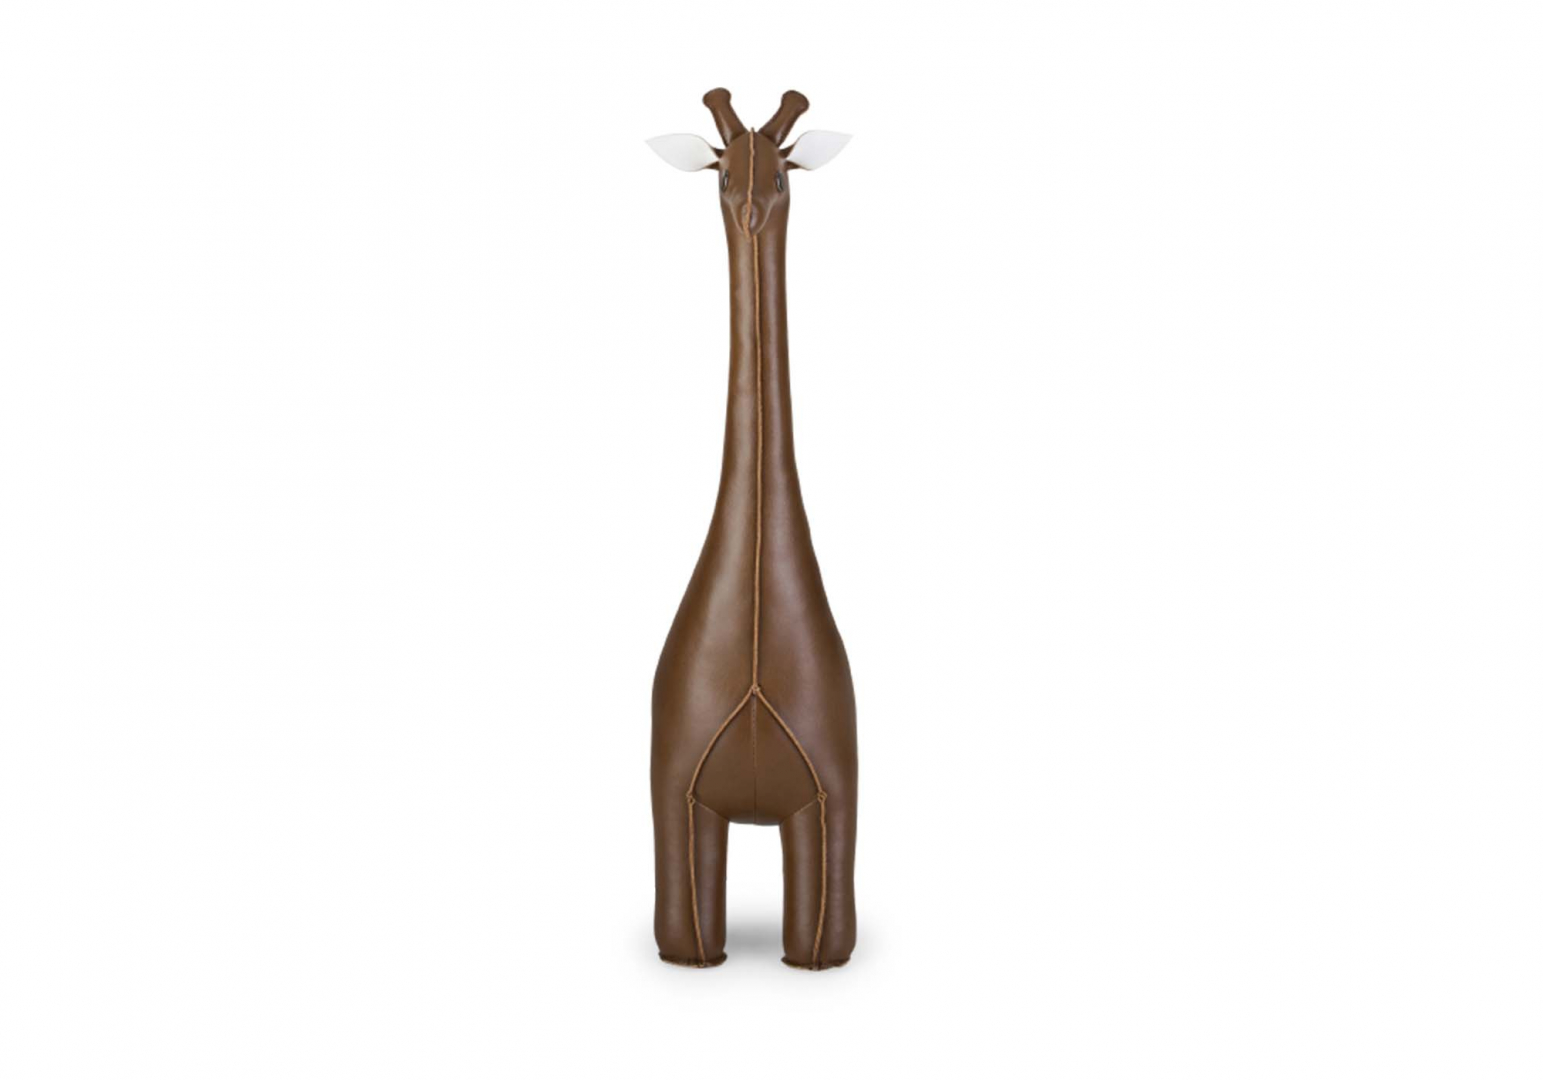 serre-livre design girafe zuny